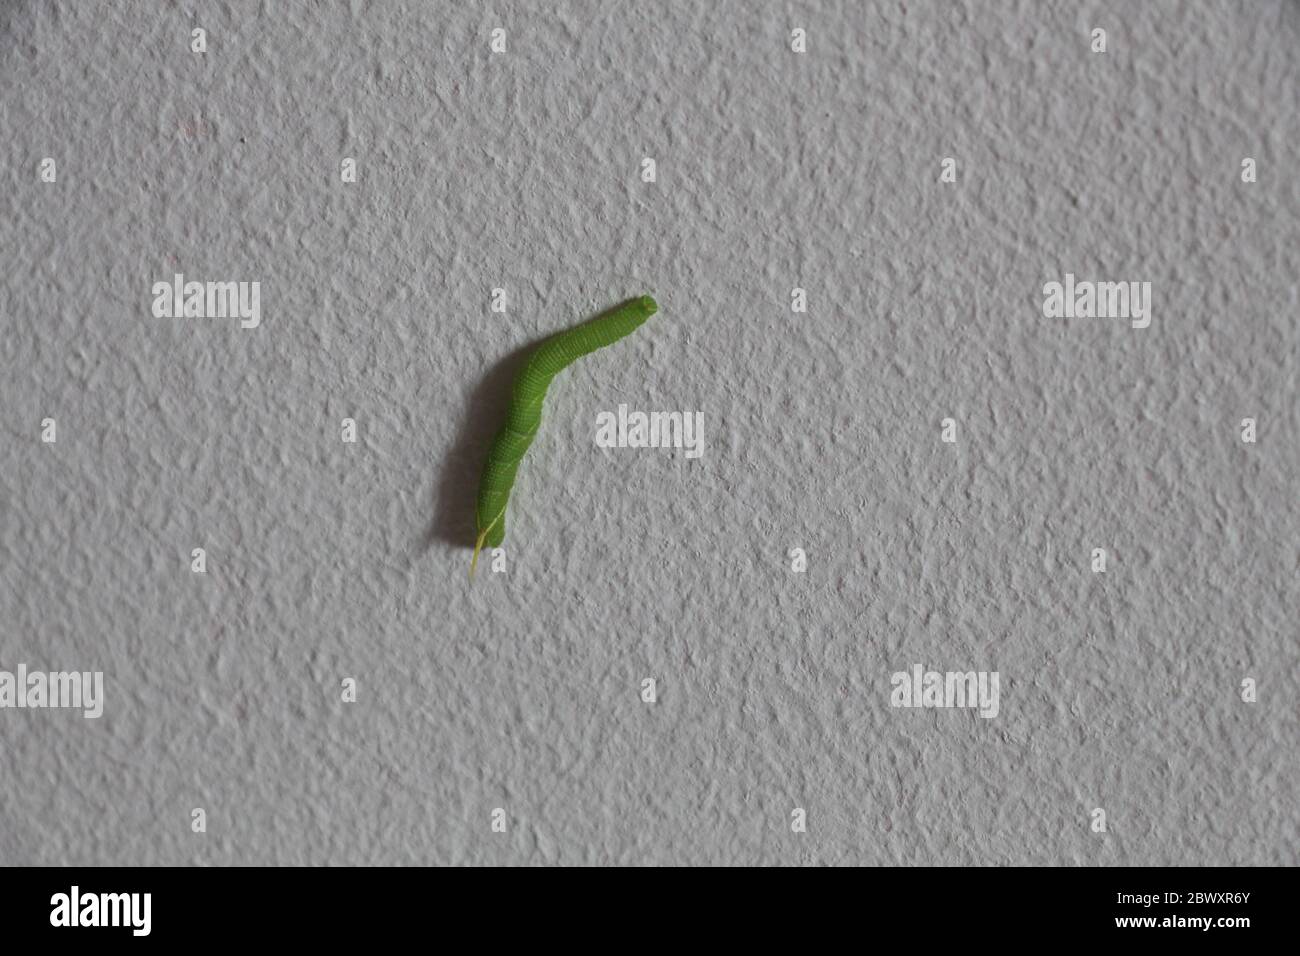 green caterpillar upon a wall Stock Photo